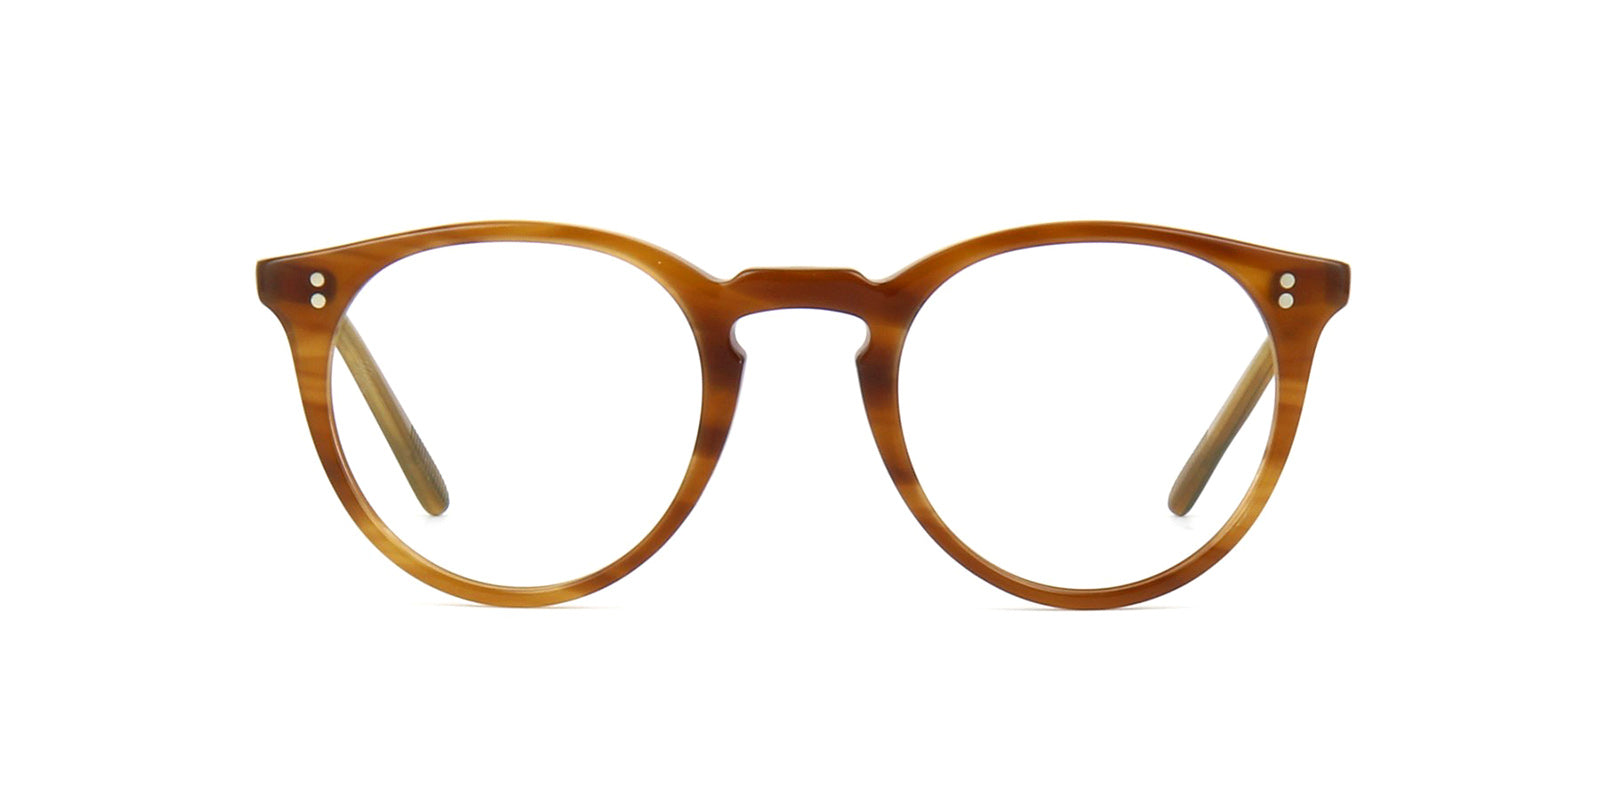 Round amber reading eyeglasses frame